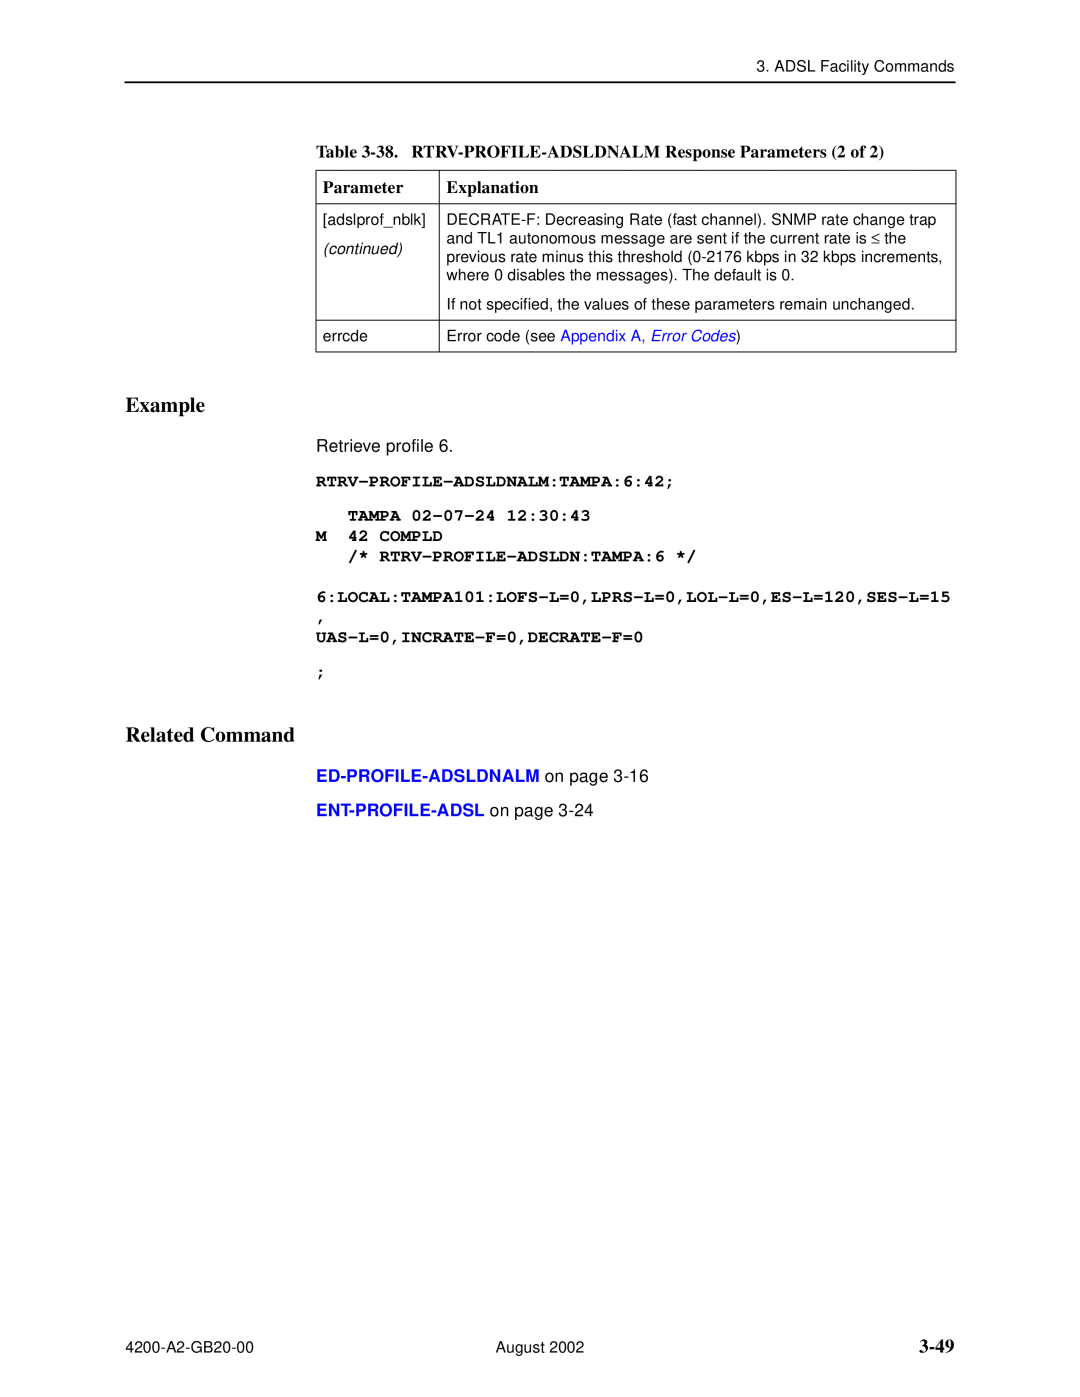 Paradyne 4200 3-49, 38. RTRV-PROFILE-ADSLDNALM Response Parameters 2 of, RTRV-PROFILE-ADSLDNTAMPA6, Example, Explanation 